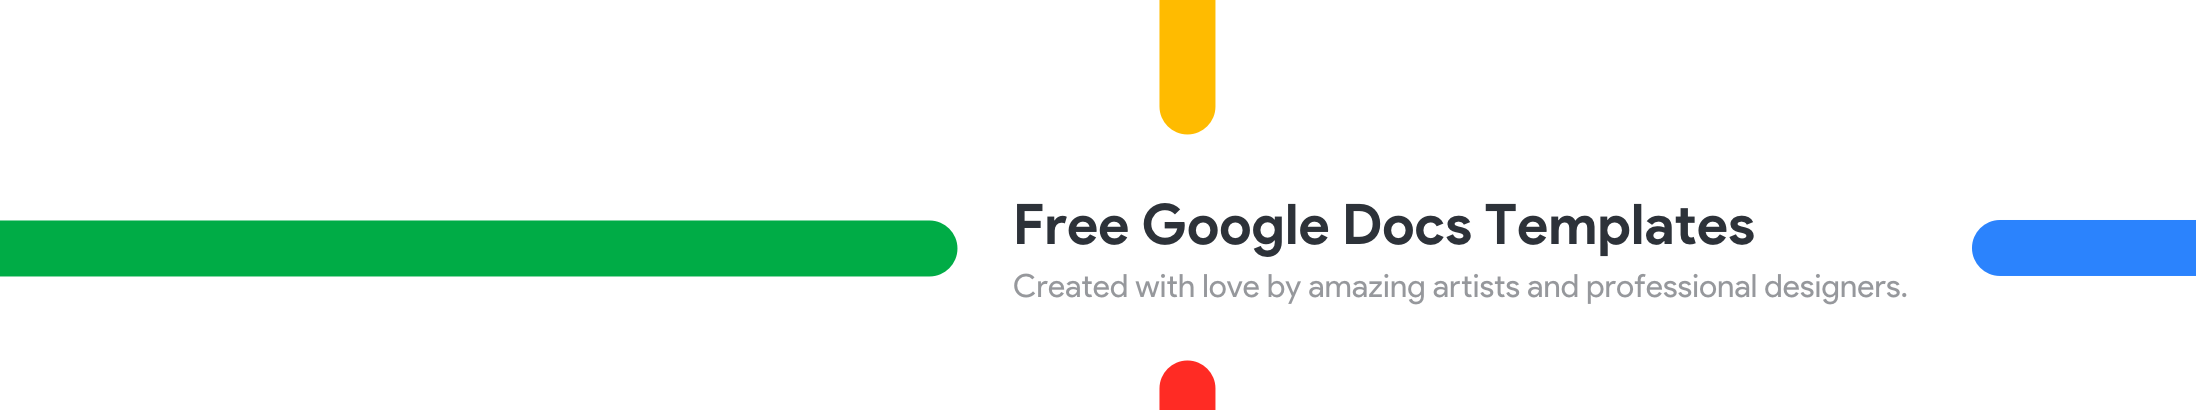 Free Google Docs Templates's profile banner